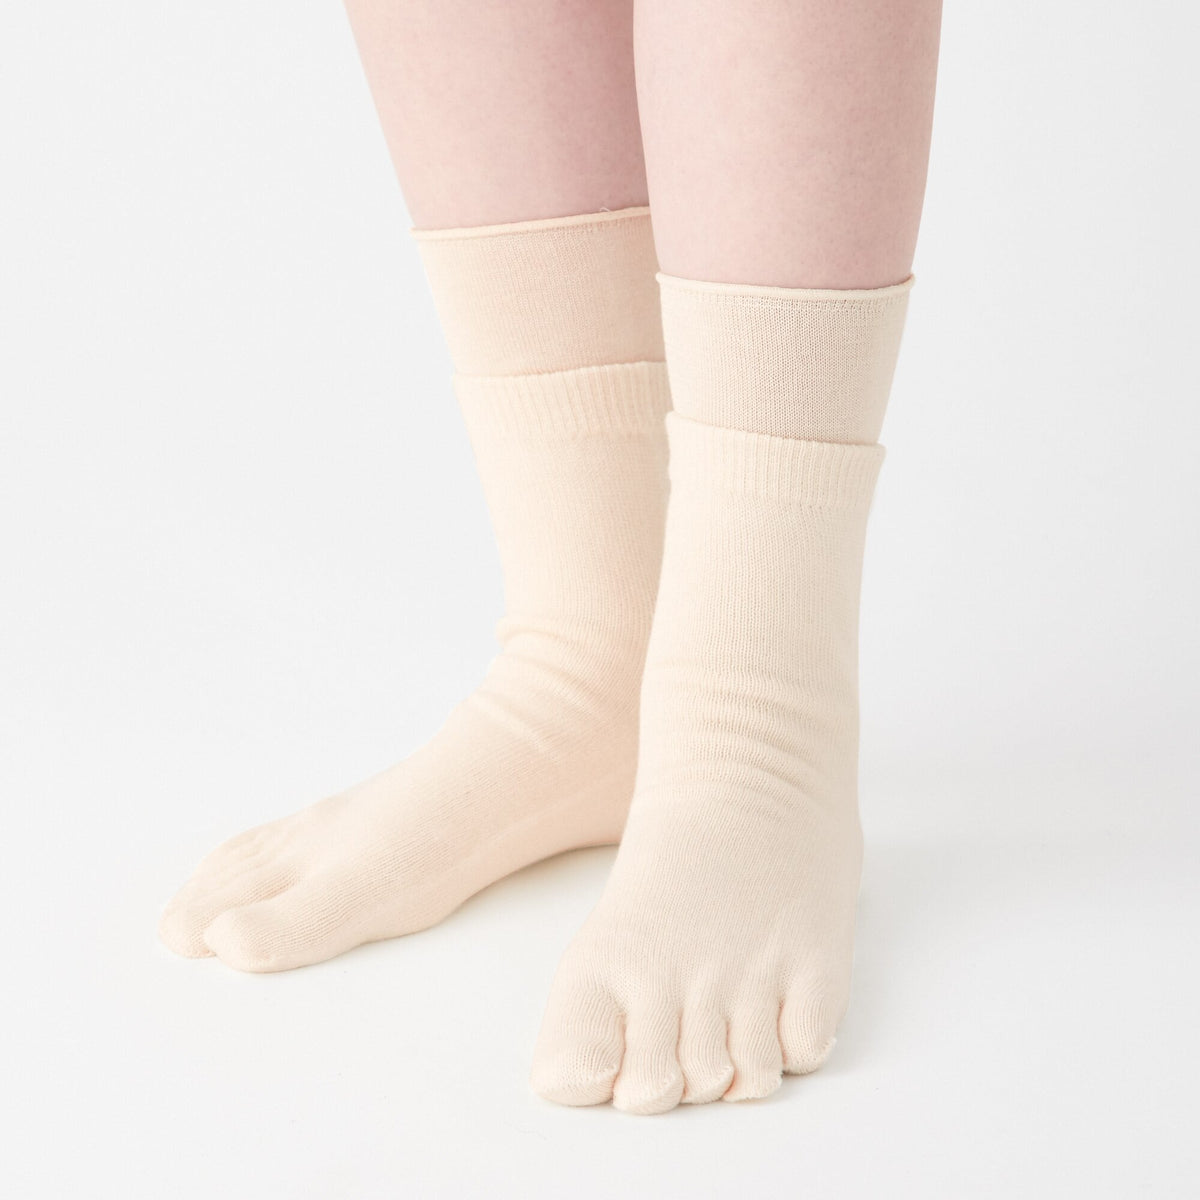 Right Angle 5 Toe Socks for Layering, Women's Socks